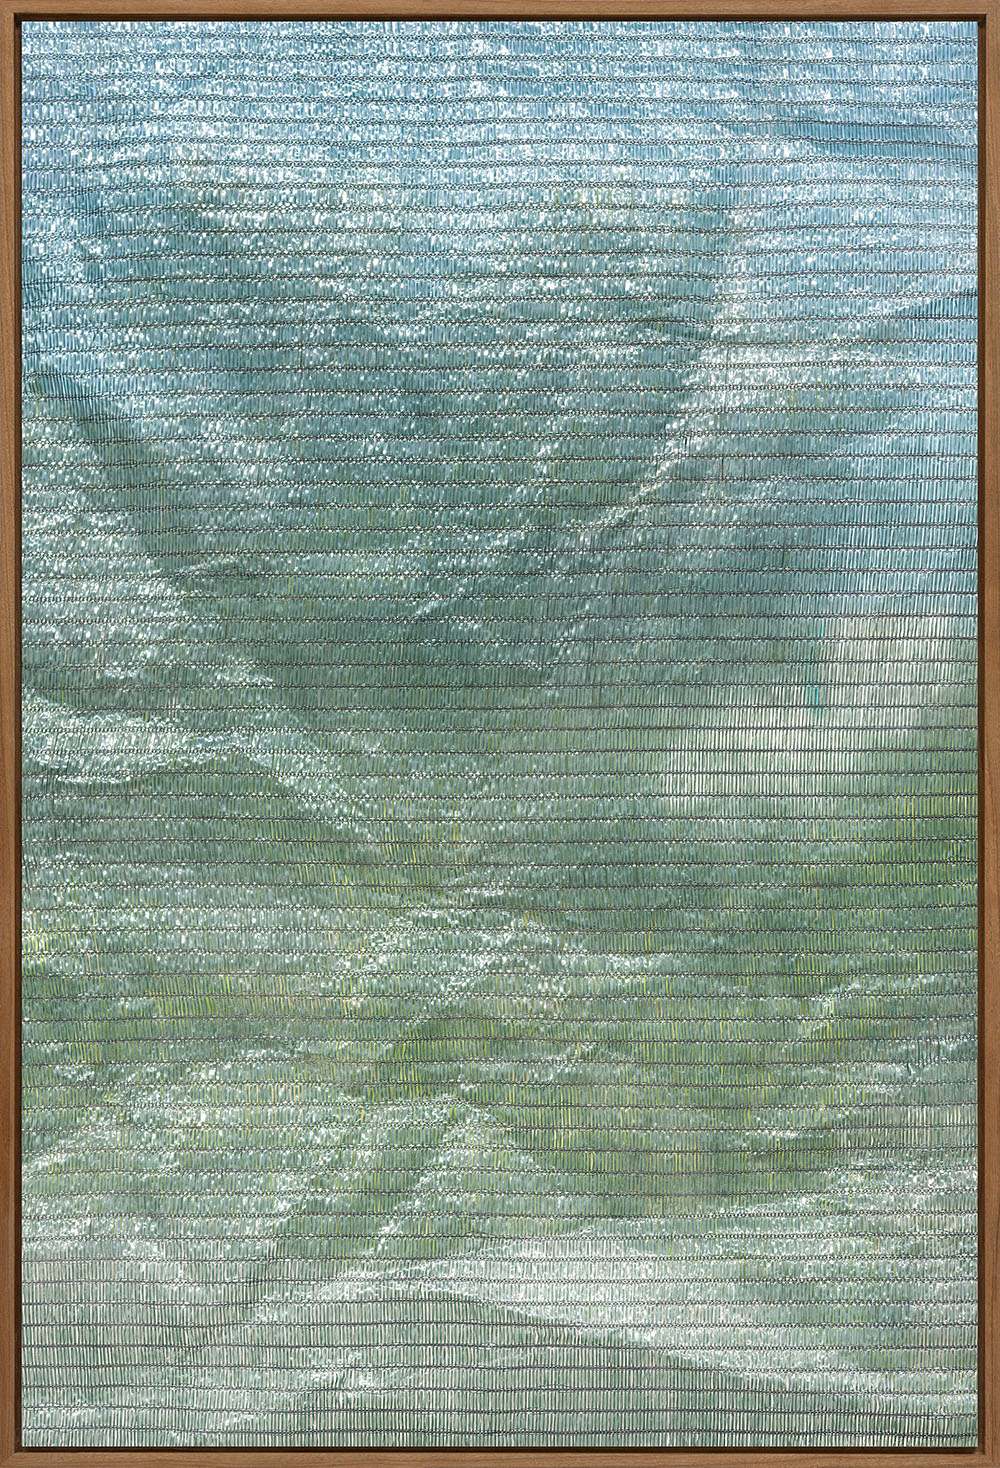 Berit Schneidereit draperie V mit Rahmen, Tintenstrahldruck, 48x33cm, 5+2AP, 2017